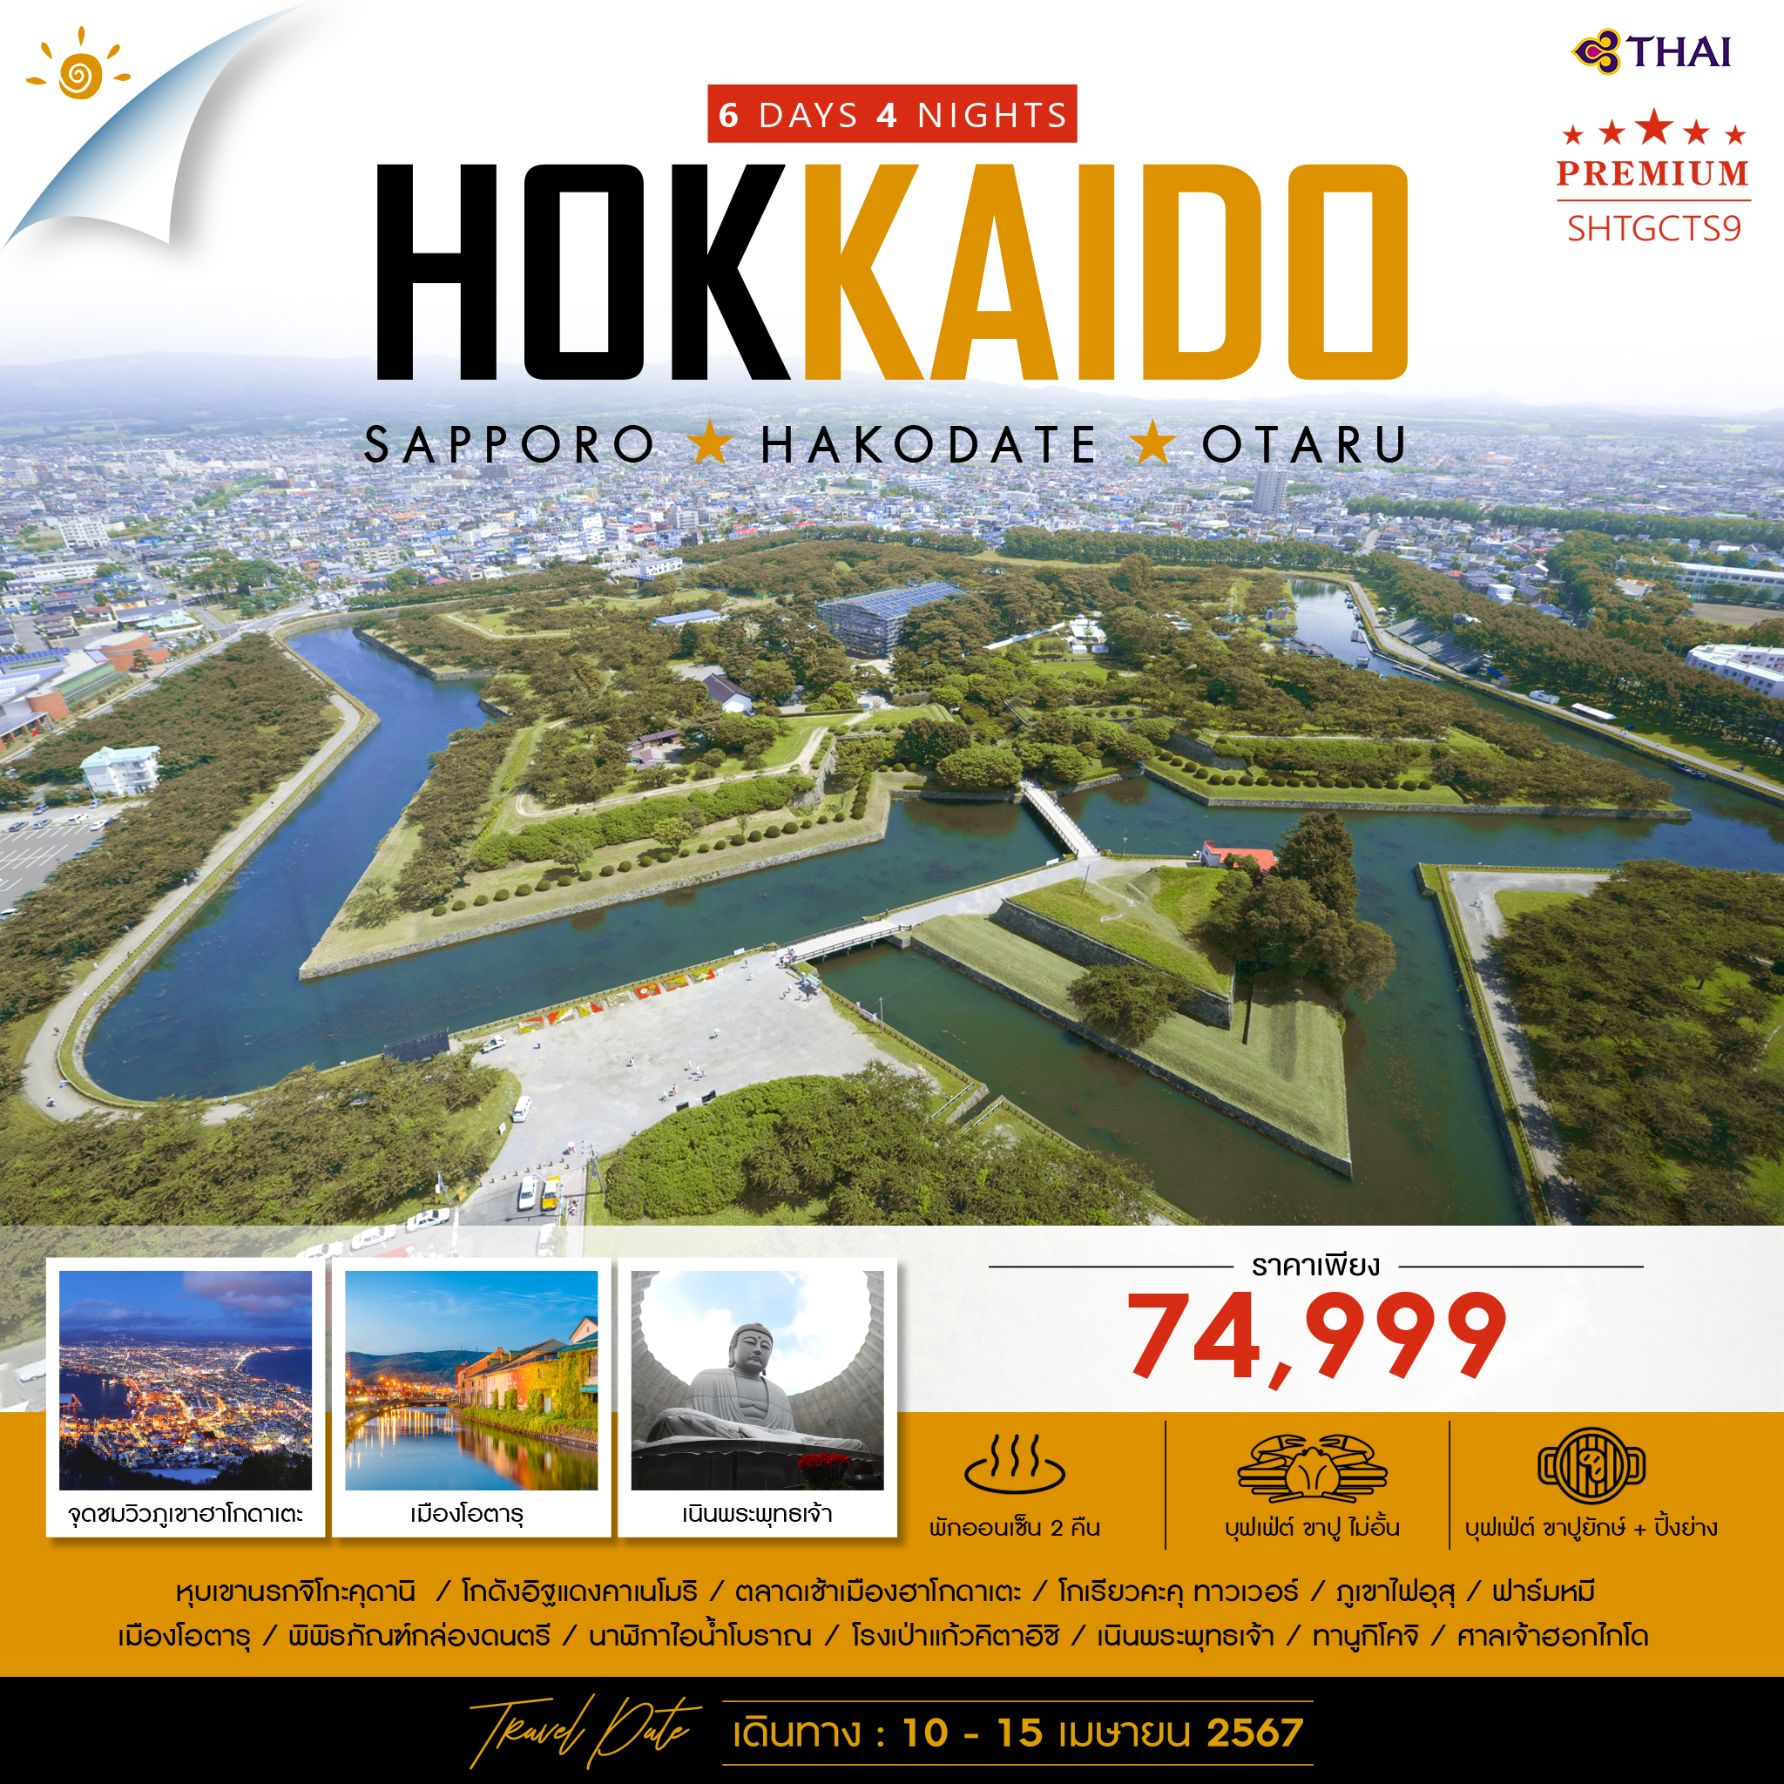 HOKKAIDO Sapporo Hakodate Otaru 6 วัน 4 คืน เดินทาง 10-15 เม.ย.67 ราคา 74,999.- THAI AIRWAYS (TG)